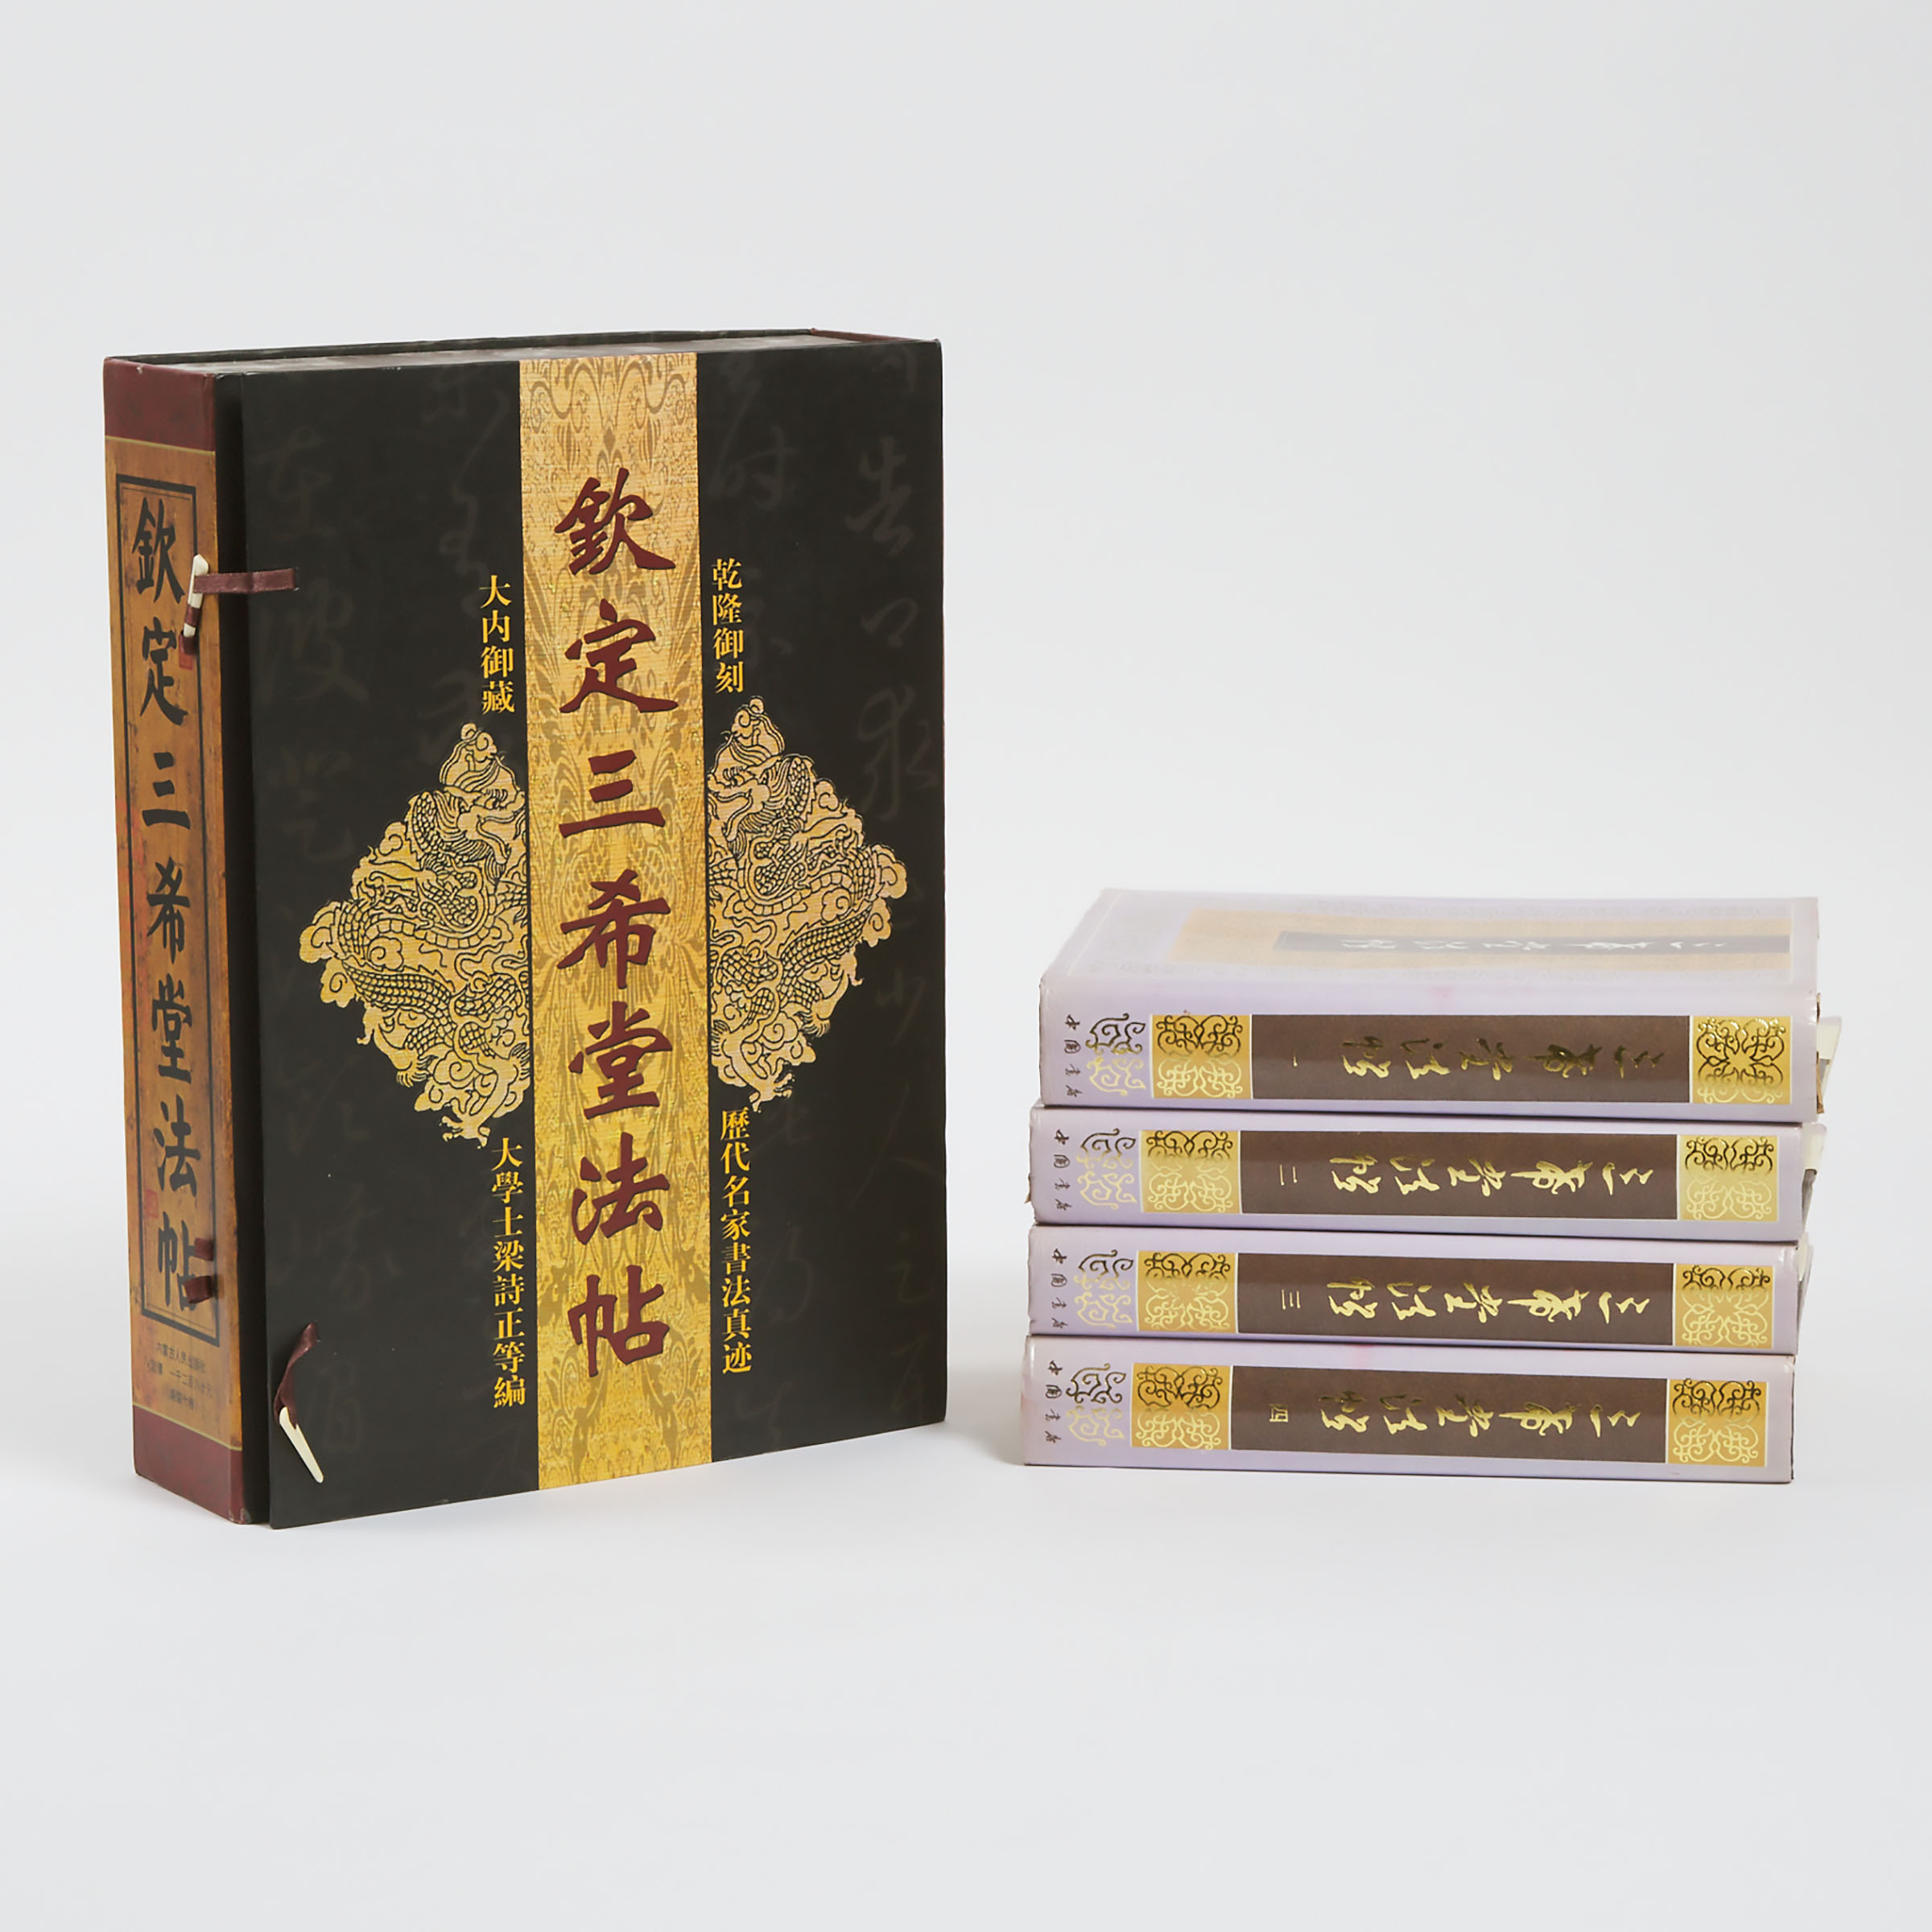 A Set of Ten 'Sanxitang Fatie' Volumes, Together With a Set of Four 'Sanxitang Fatie' Volumes